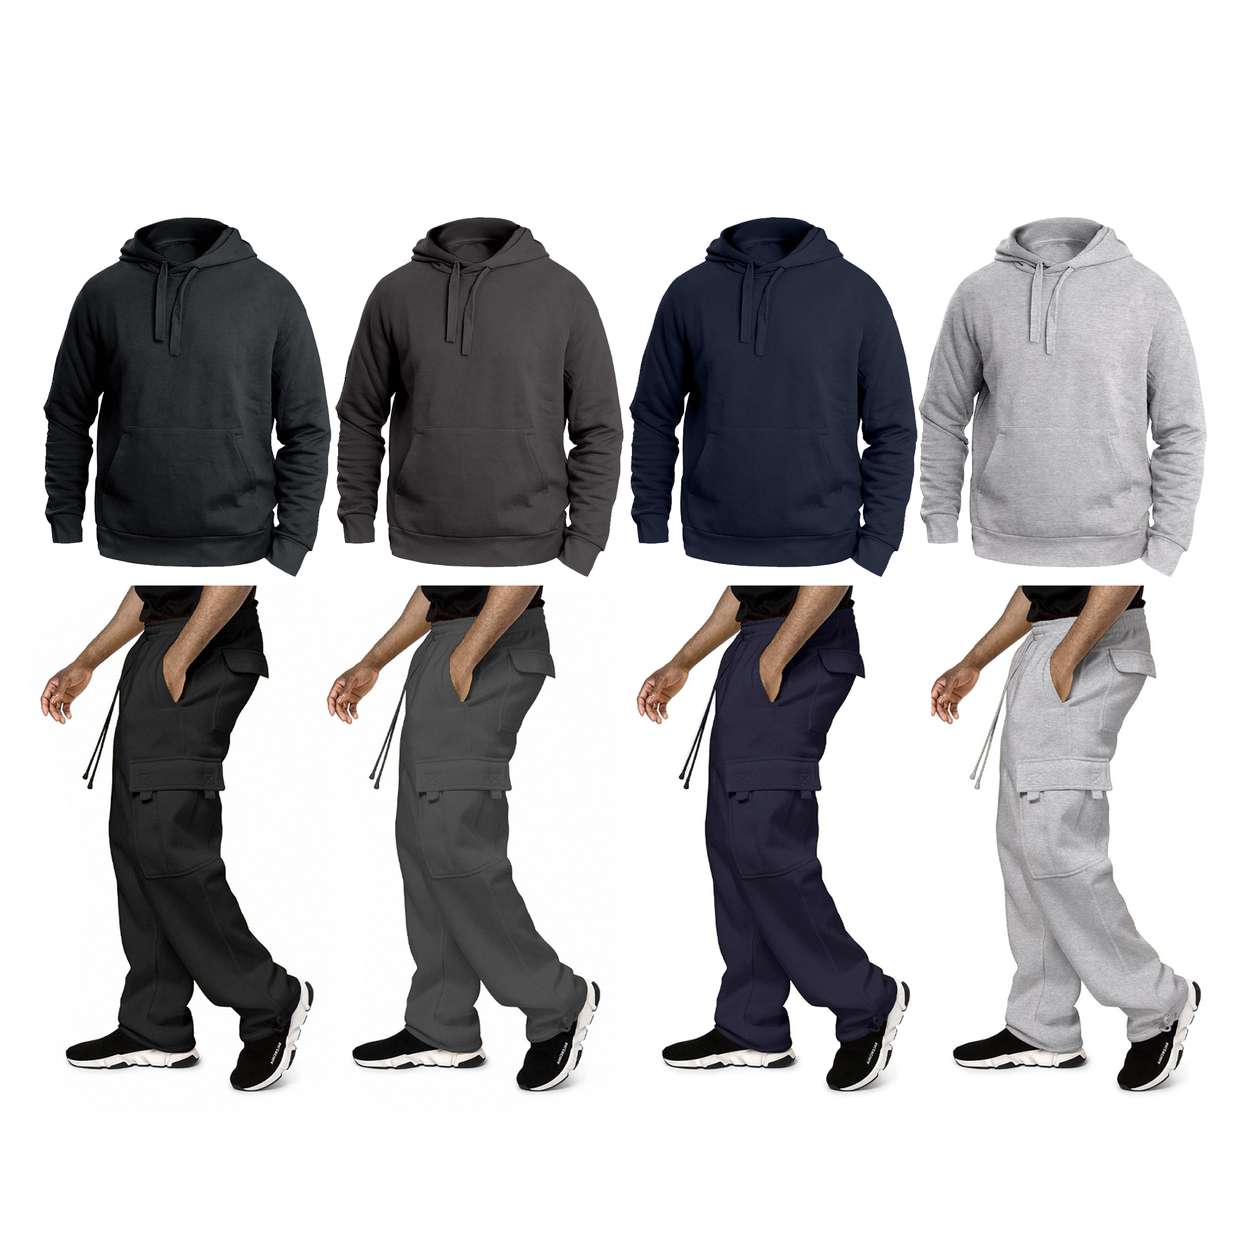 Men's Big & Tall Winter Warm Cozy Athletic Fleece Lined Multi-Pocket Cargo Sweatsuit - Navy, Xx-large